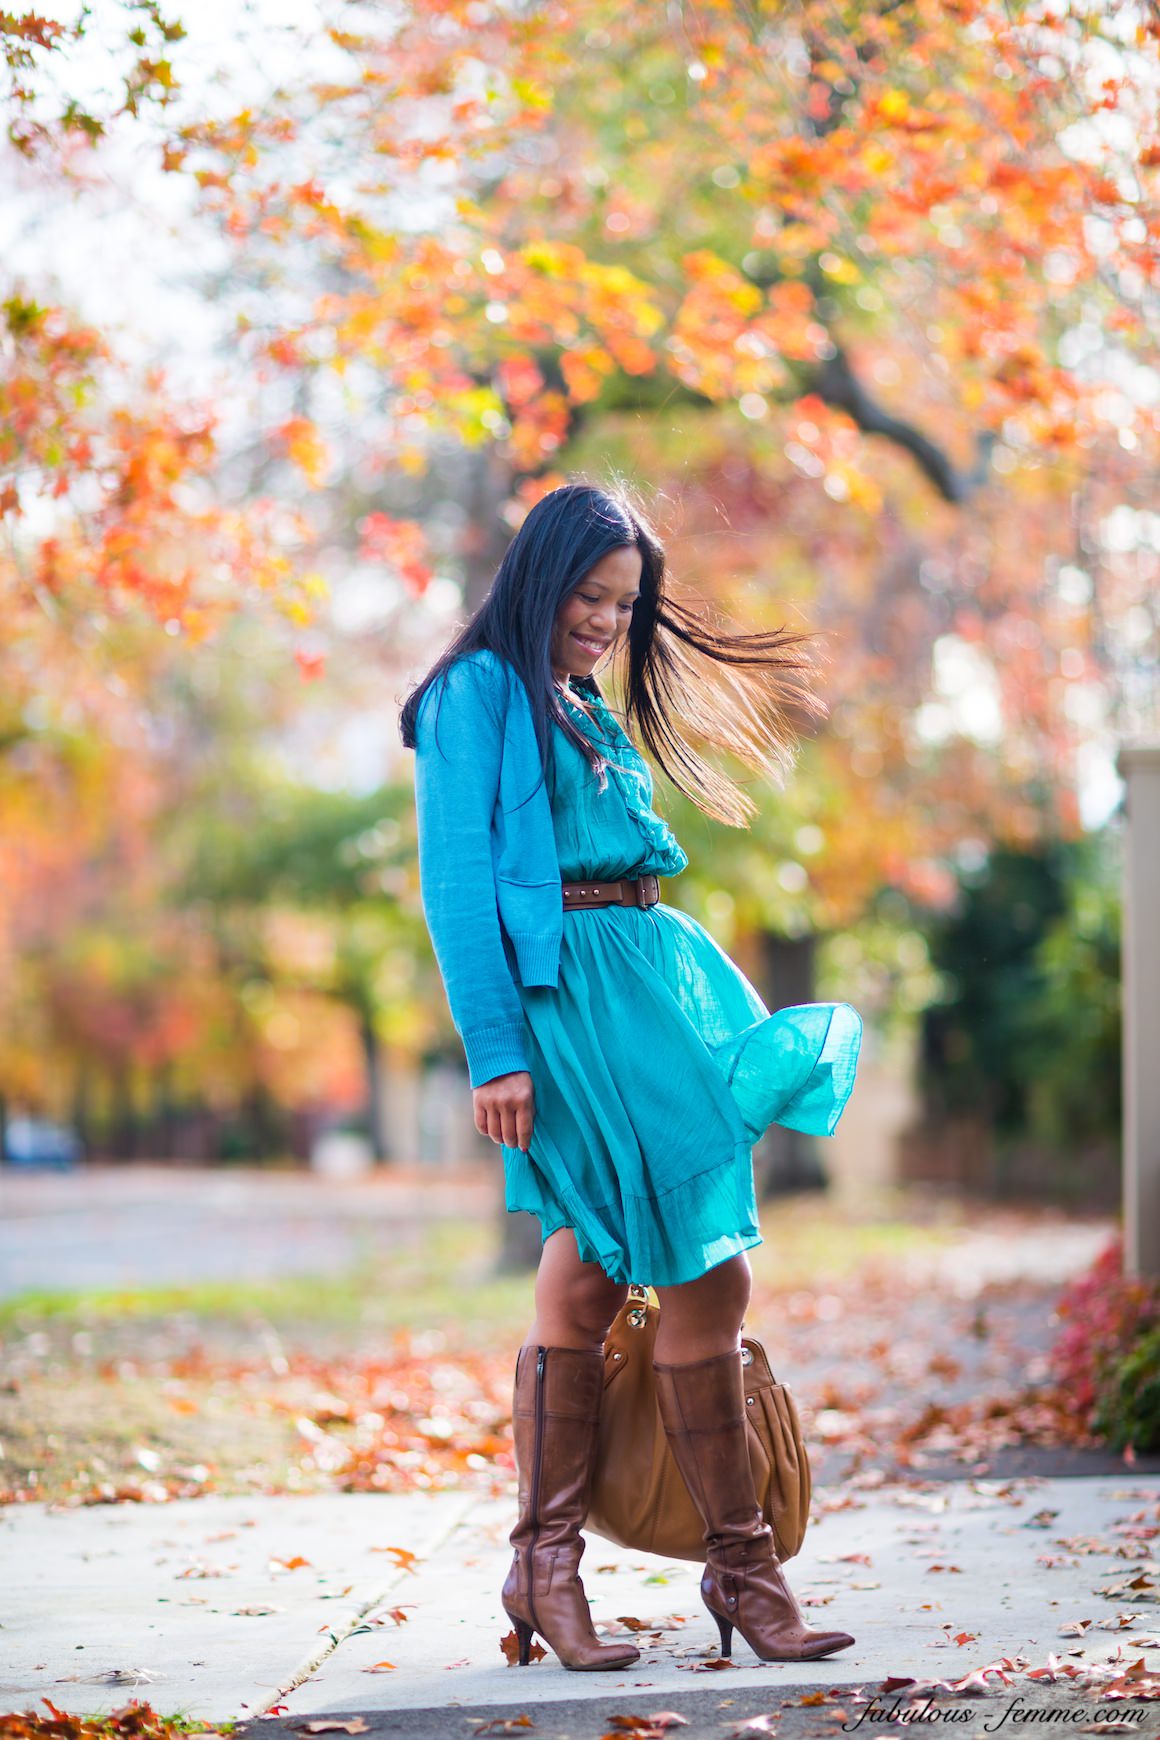 melbourne autumn fashion - ruffleld dress - blogging in melbourne